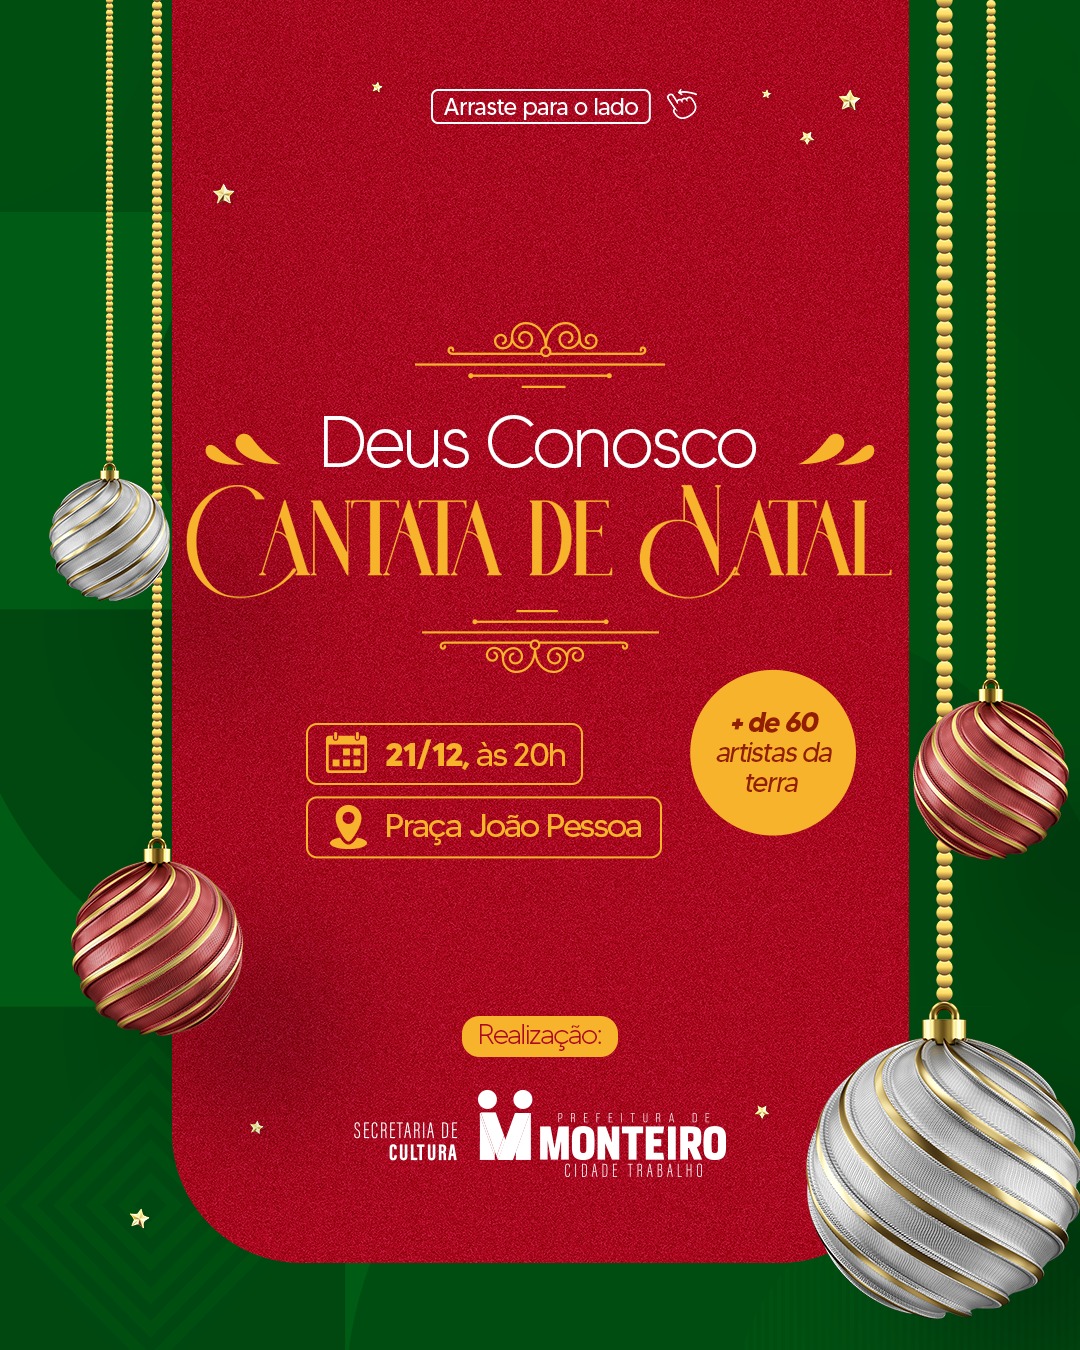 IMG-20231220-WA0019 DEUS CONOSCO: Monteiro realiza Cantata de Natal com artistas da terra nesta quinta-feira